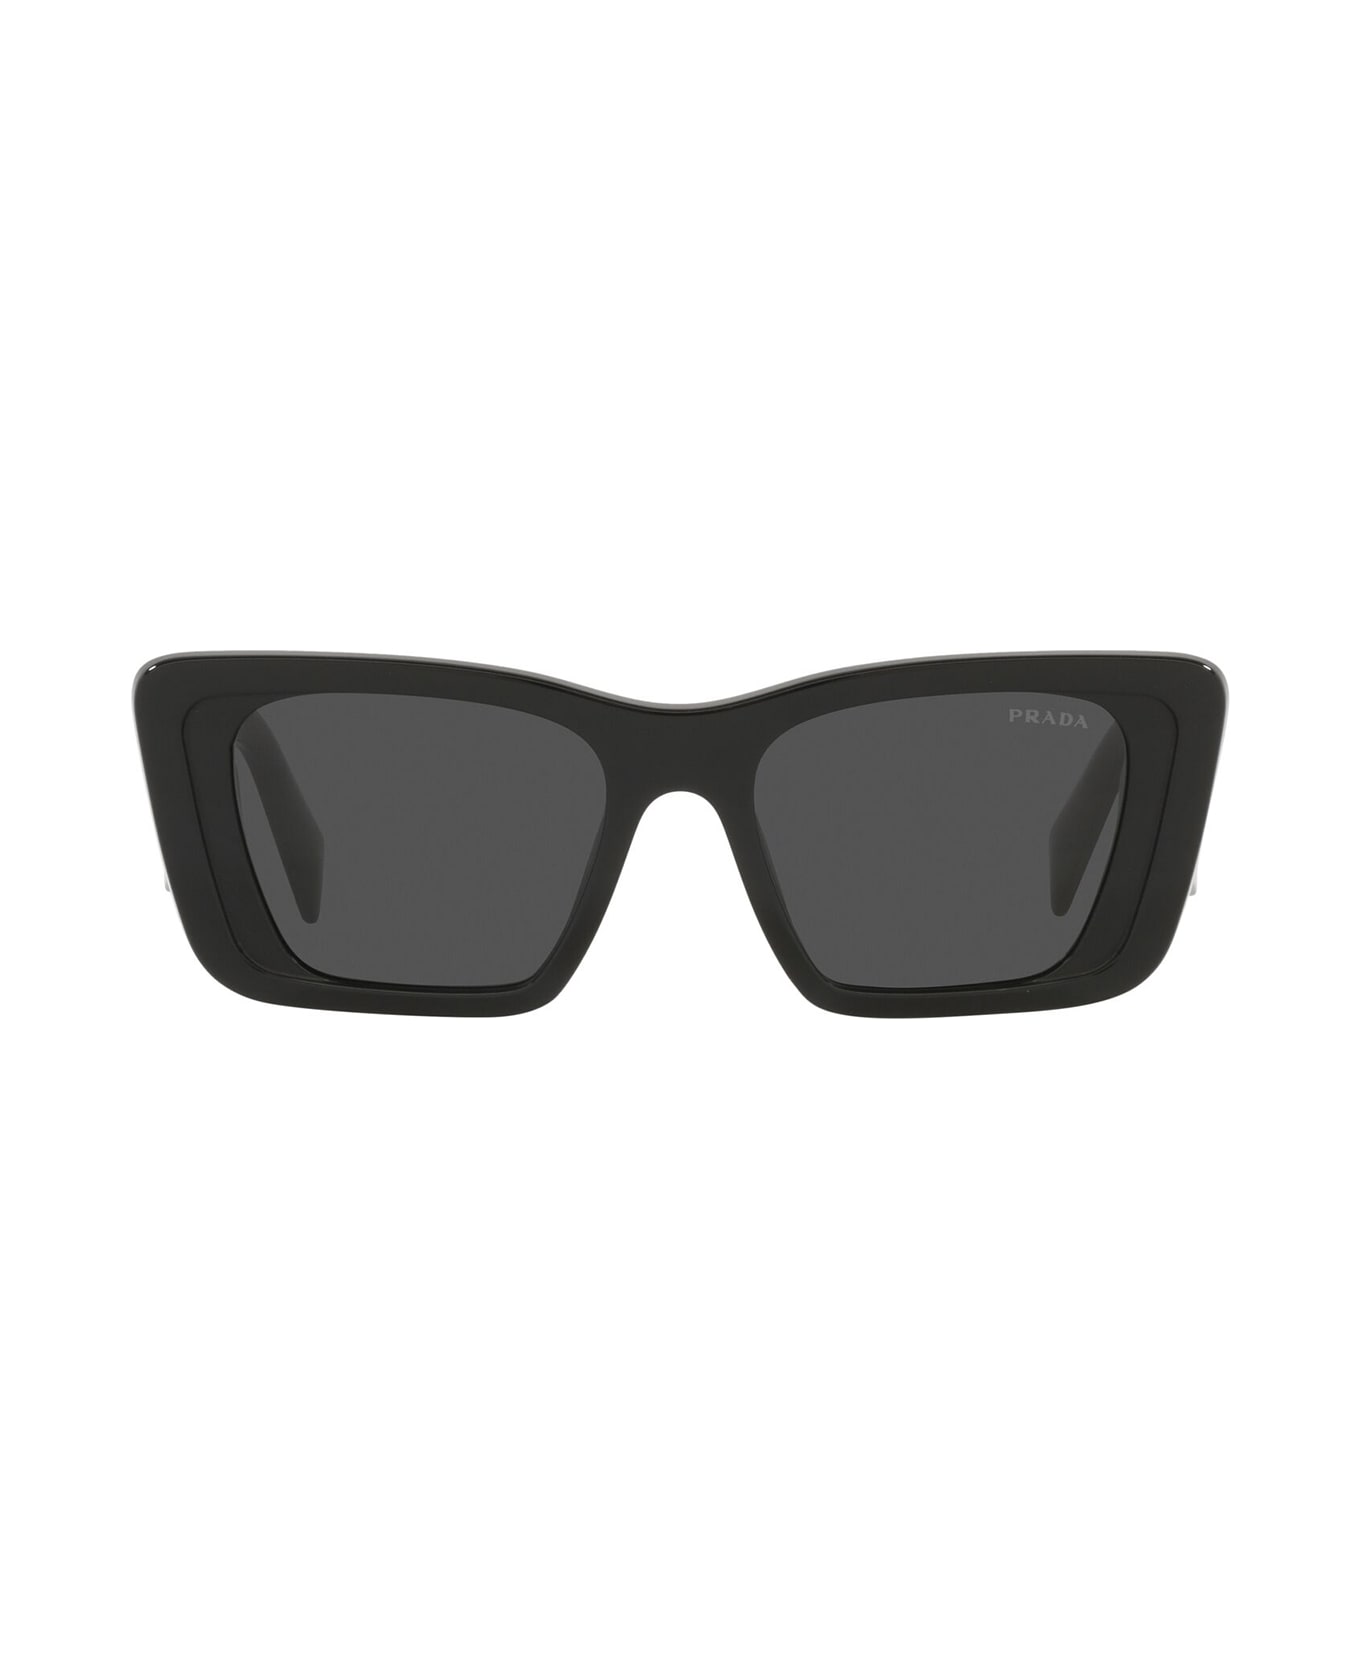 Prada Eyewear Pr 08ys Black Sunglasses - Black